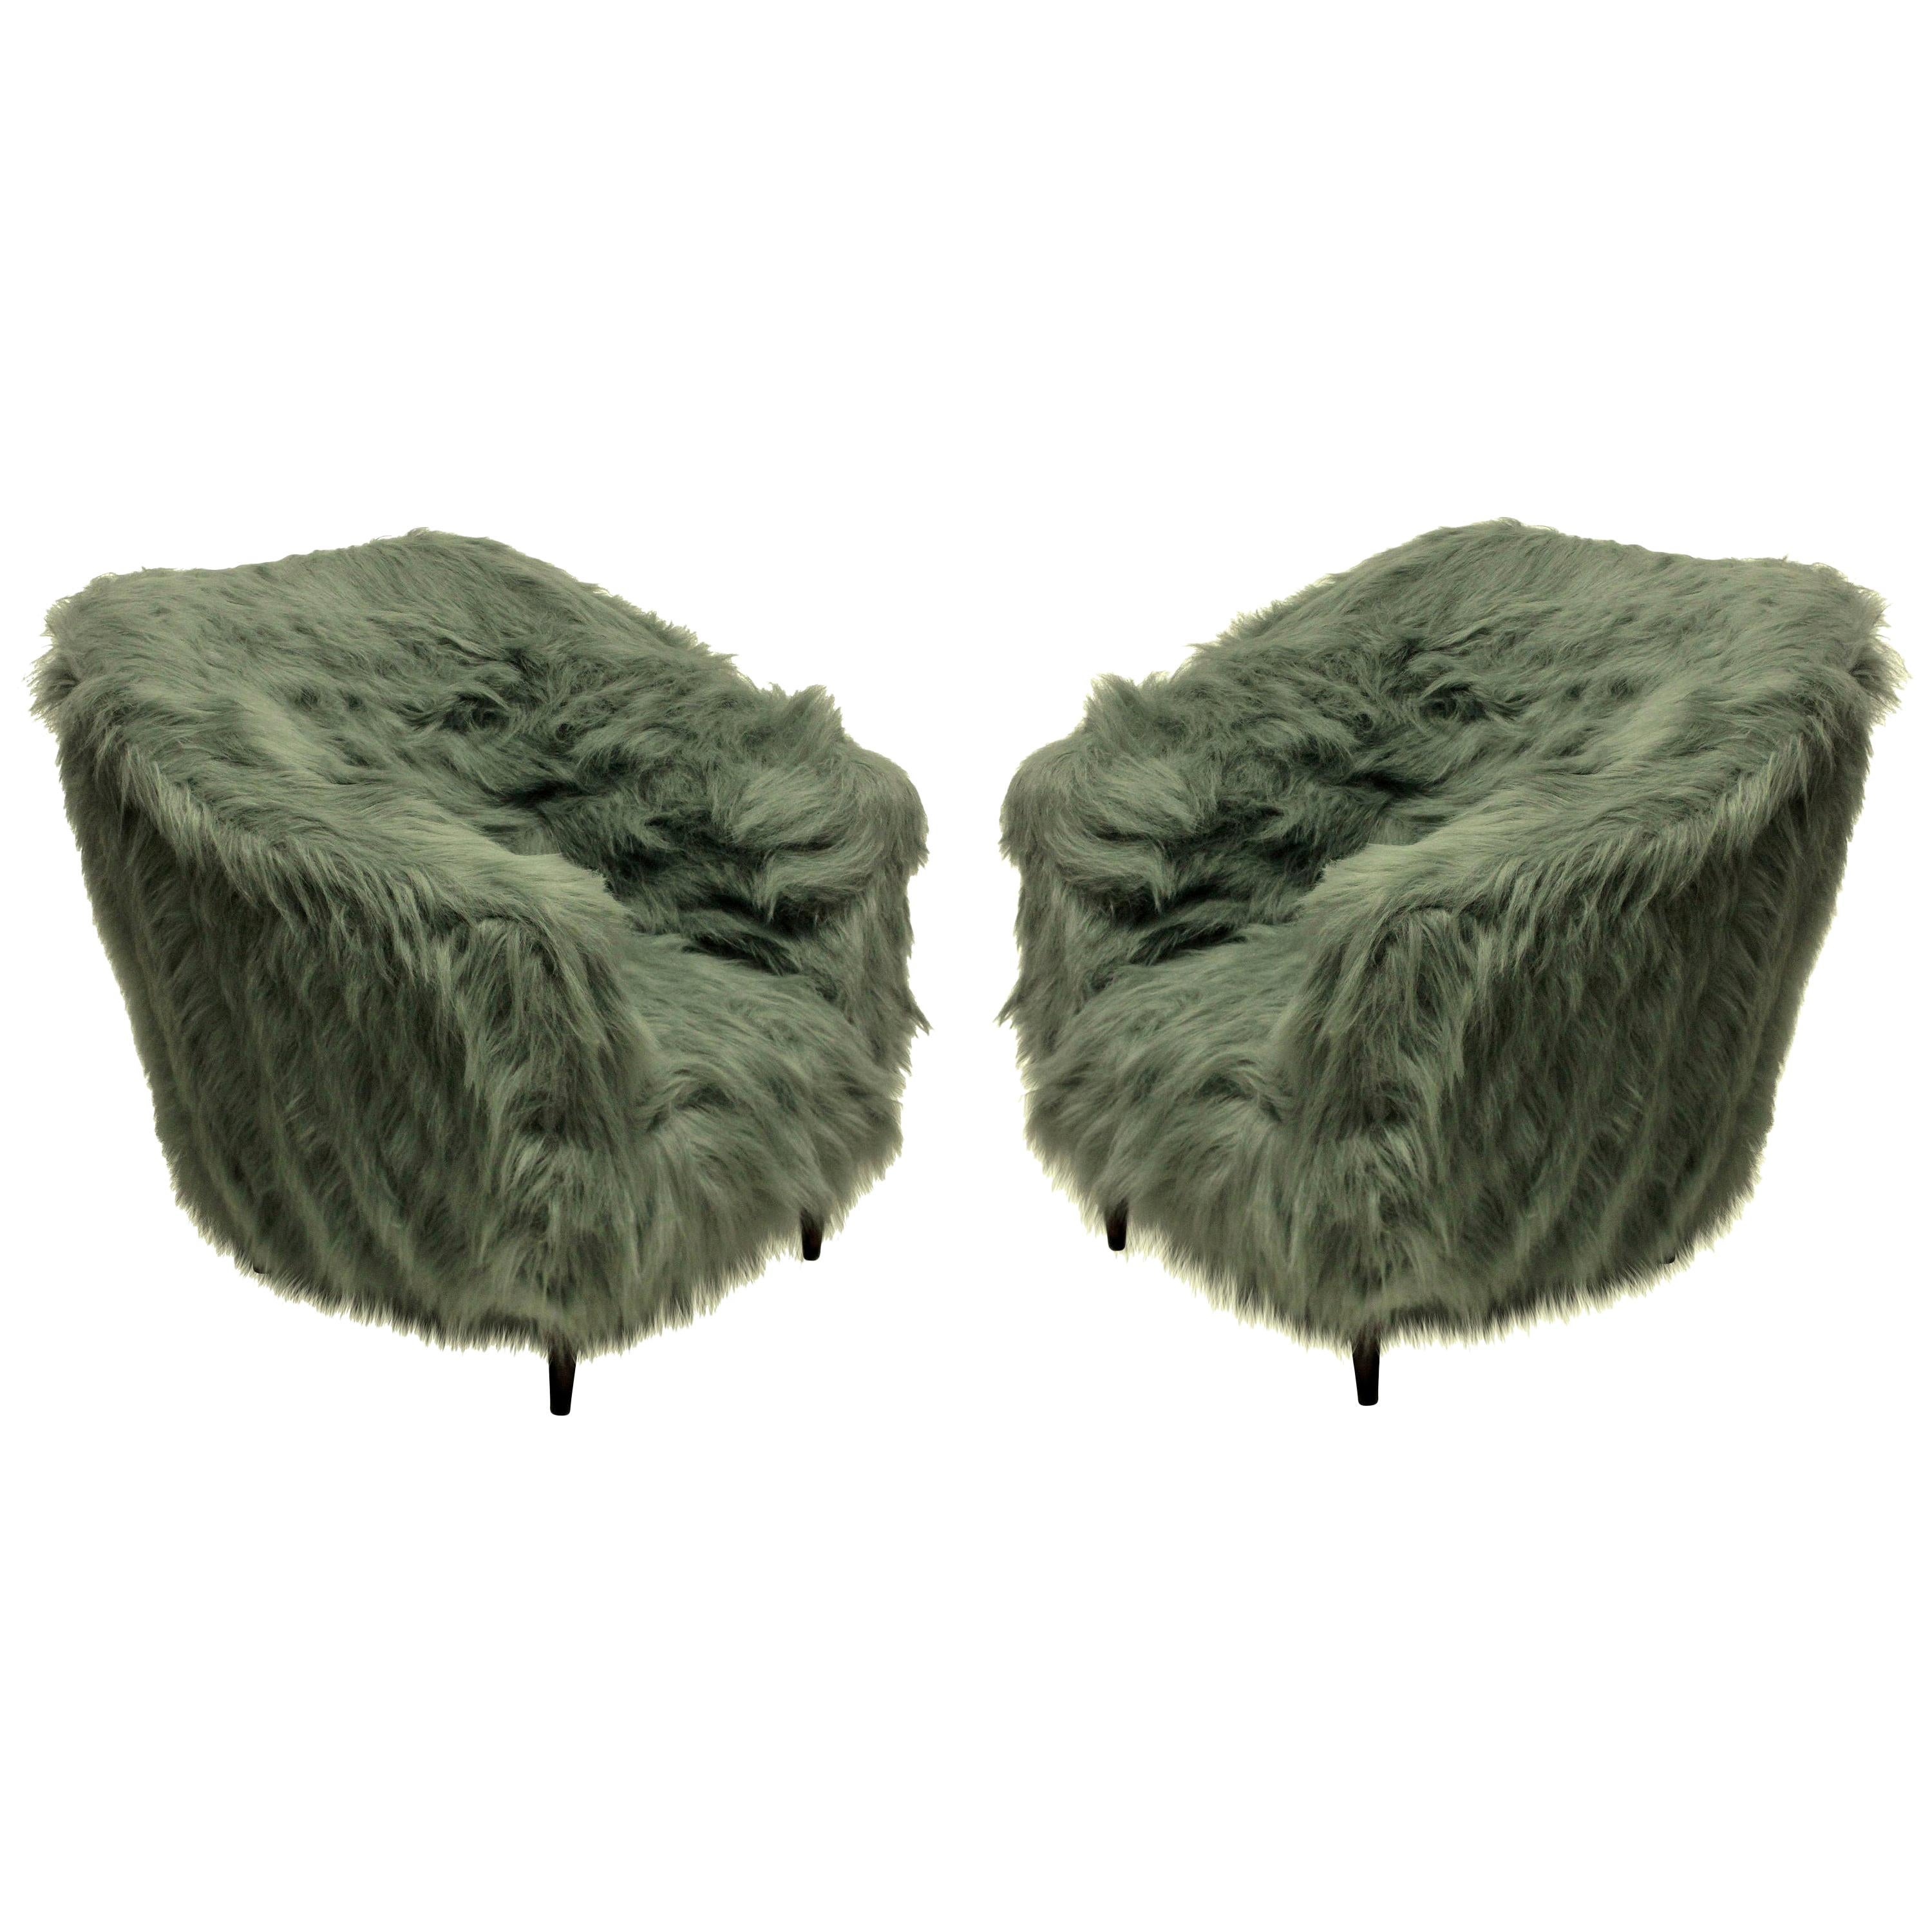 Pair of Luxurious Midcentury Armchairs in Fur